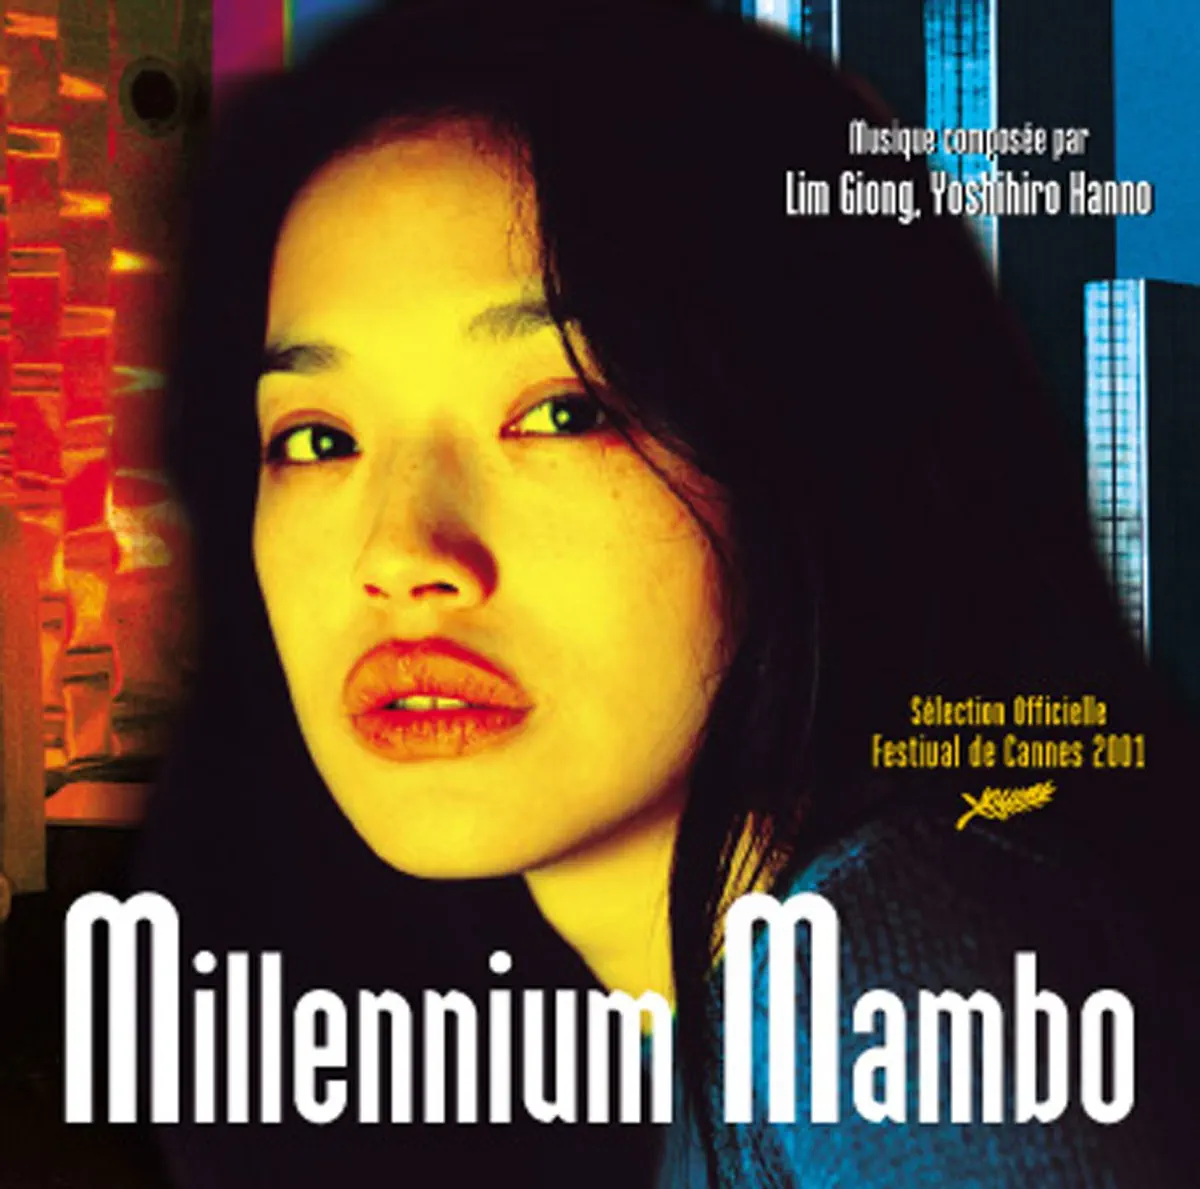 林强 - 千禧曼波 Millenium Mambo (Hou Hsiao Hsien's Original Motion Picture Soundtrack) (2008) [iTunes Plus AAC M4A]-新房子